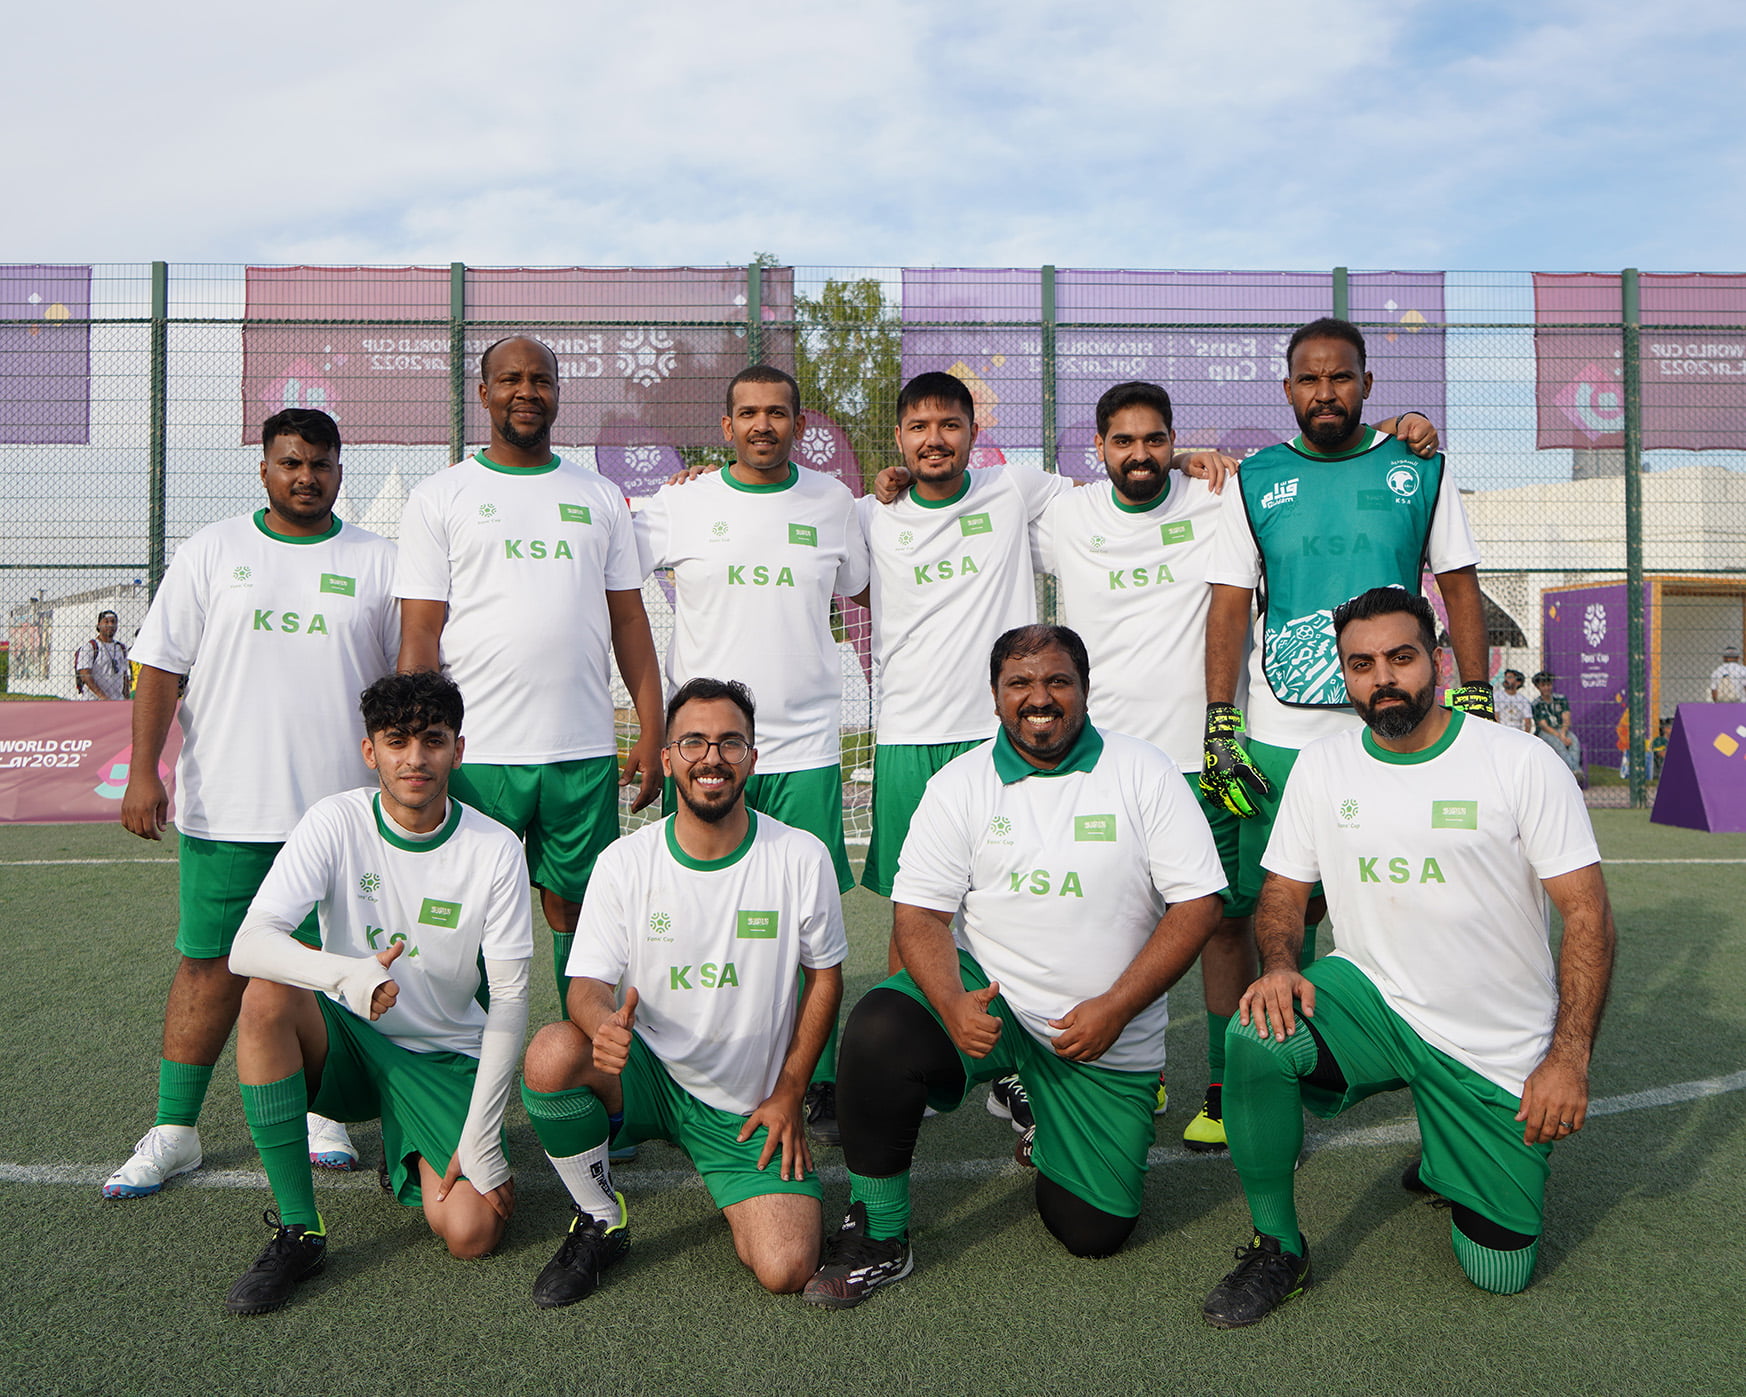 KSA - Fans’ Cup at the FIFA World Cup Qatar 2022